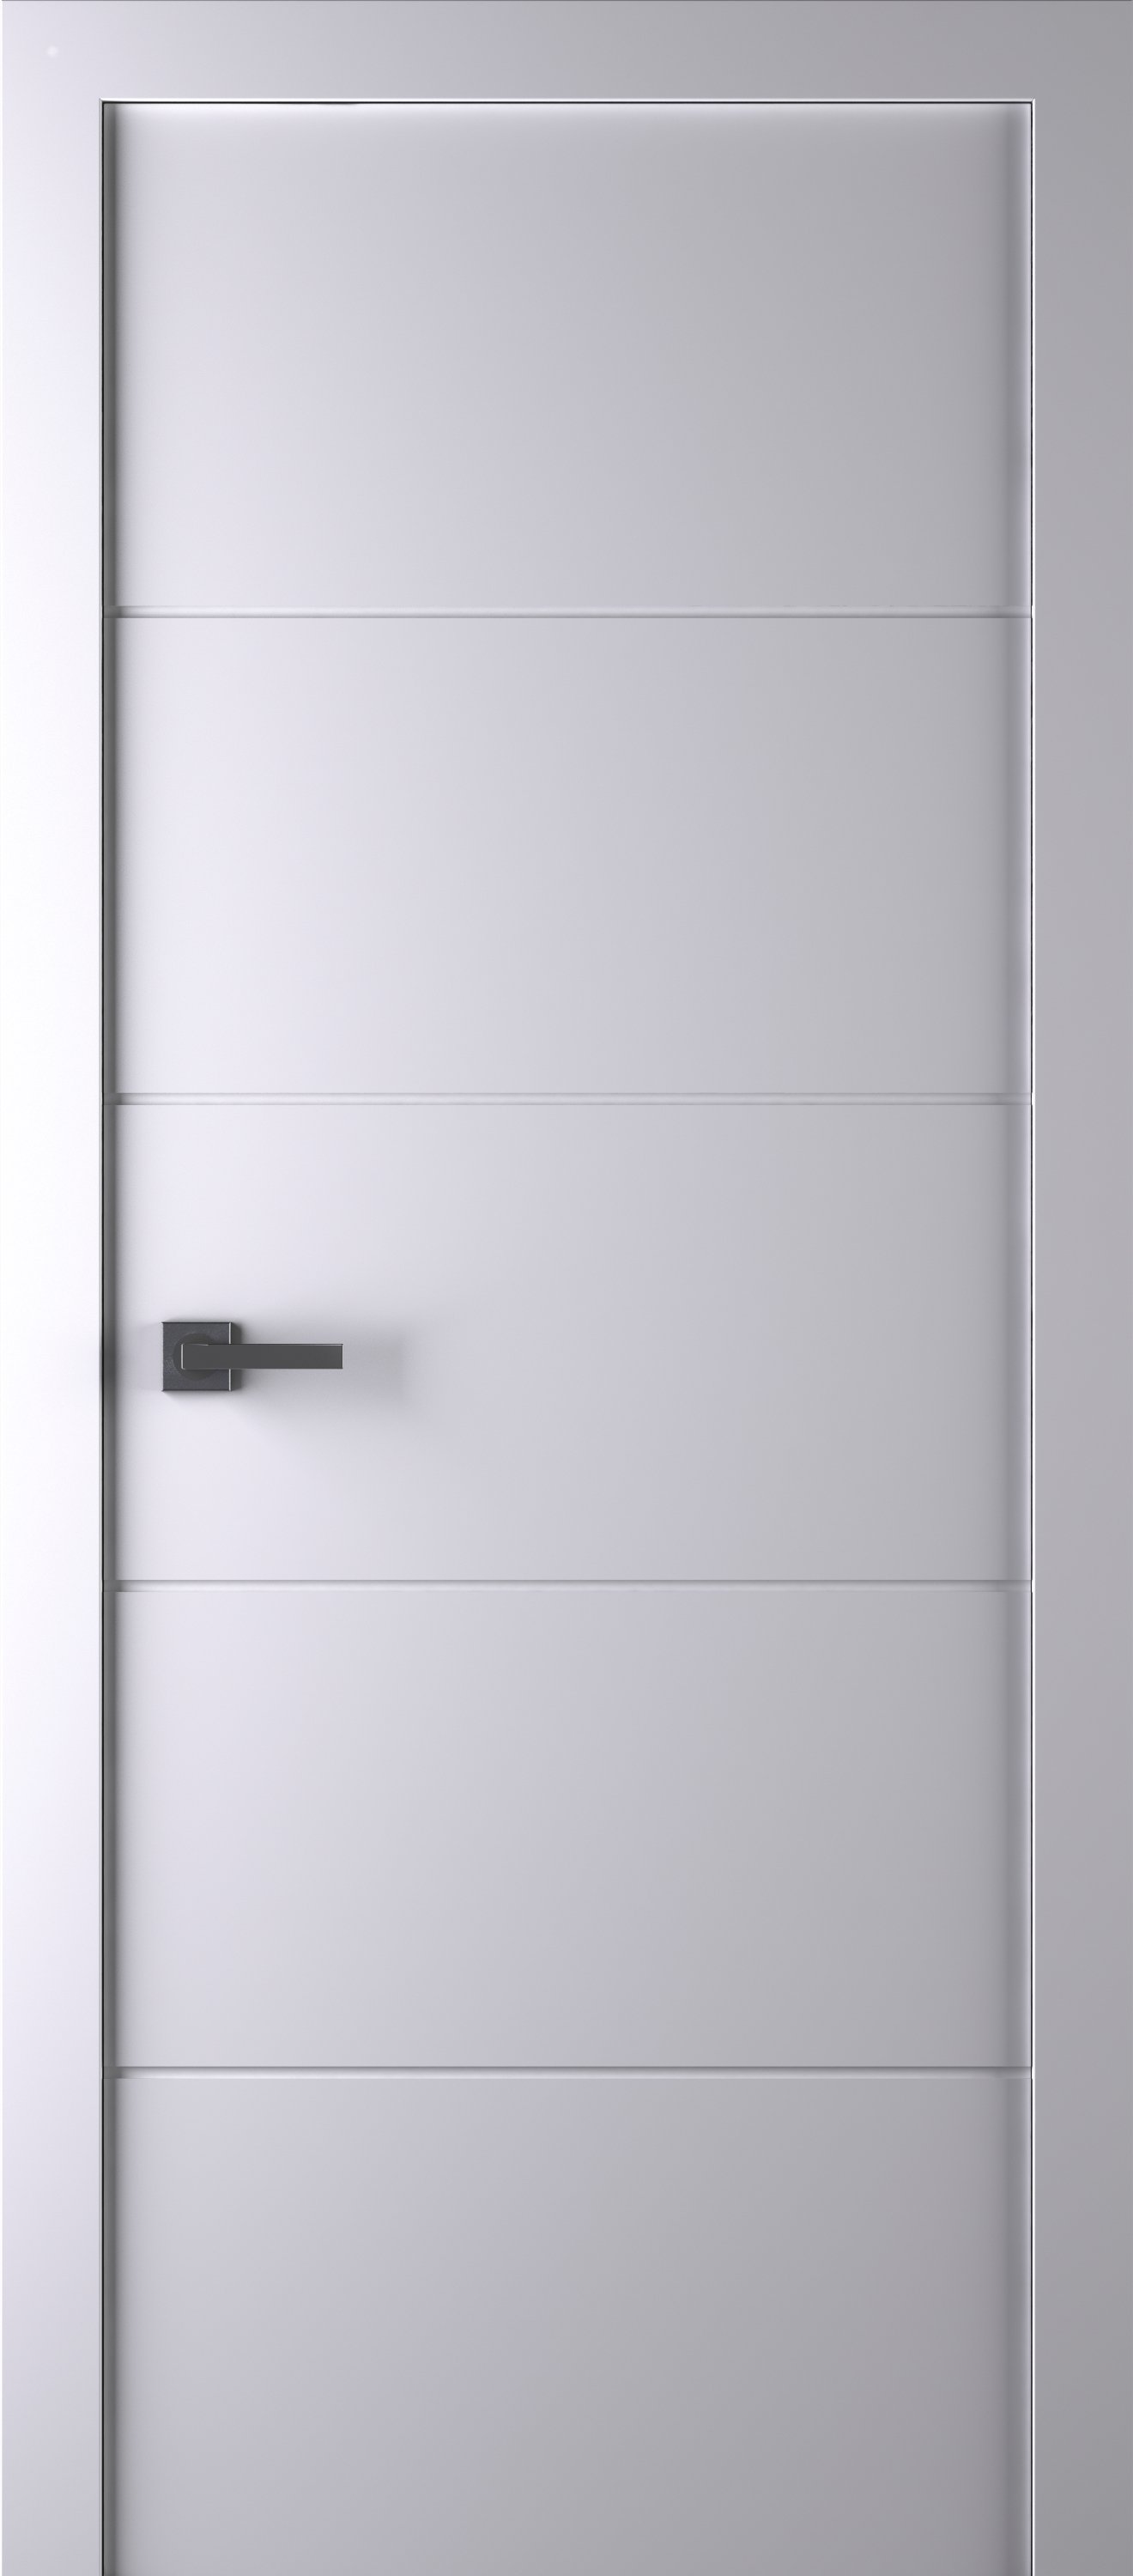 Durų varčia ARVIKA baltos spalvos, dažyta faneruotė, 700 x 2000 mm, universali